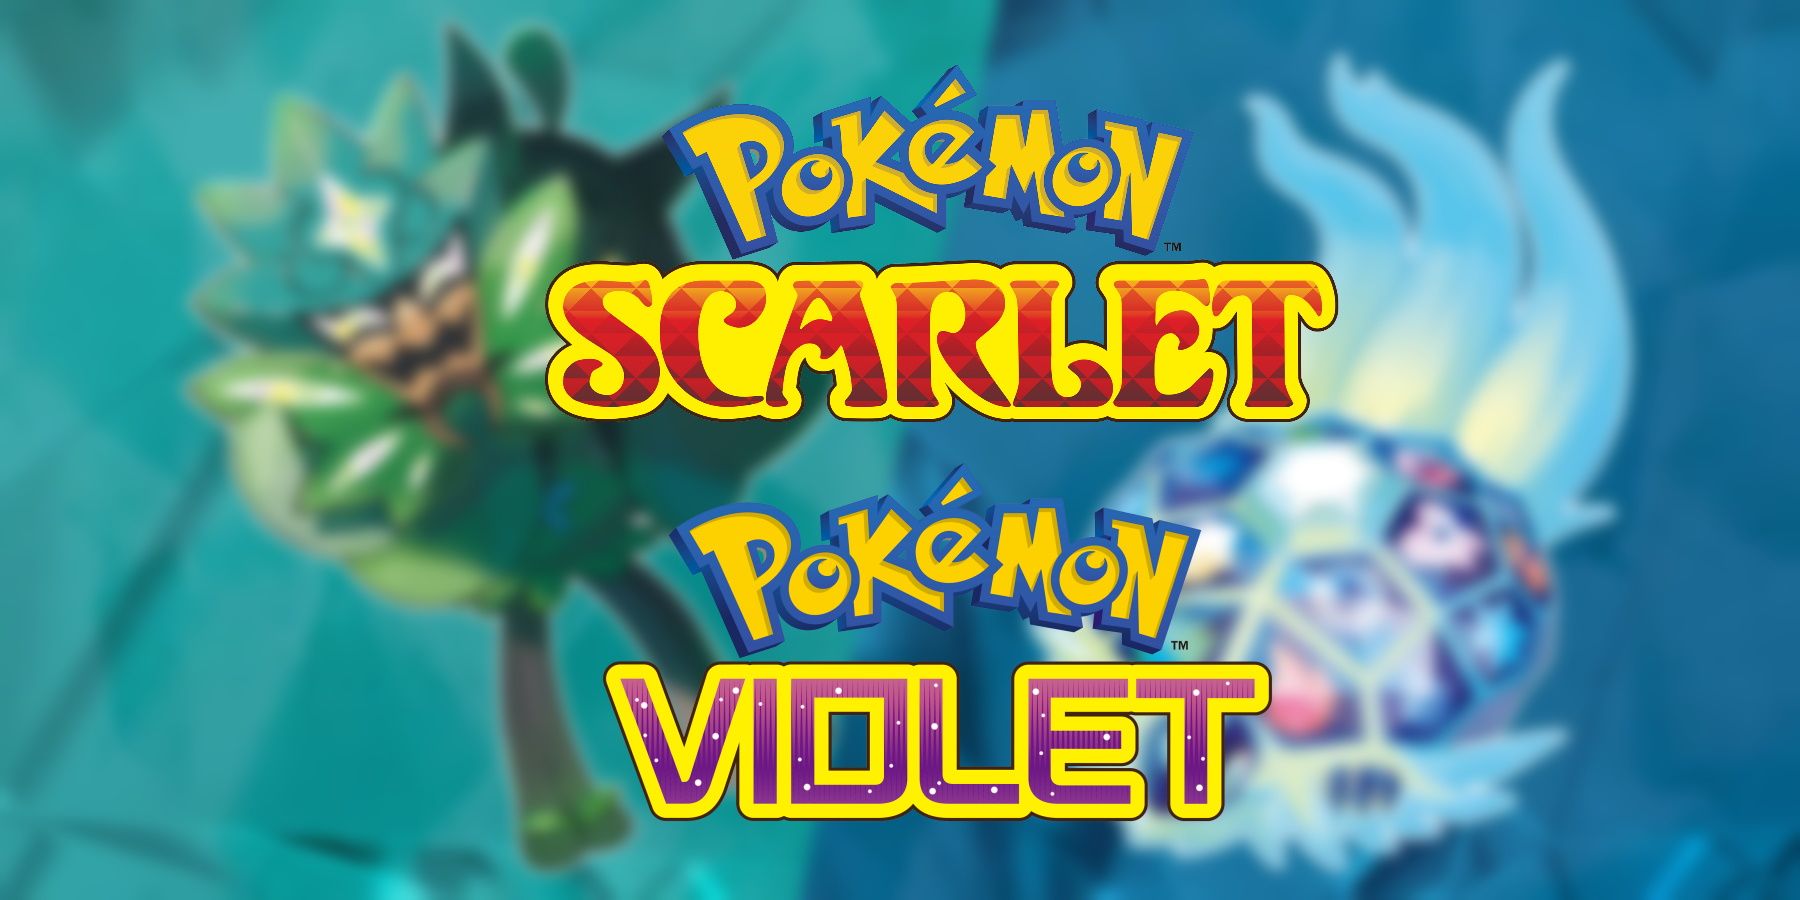 pokemon-scarlet-violet-dlc-name-color-theory